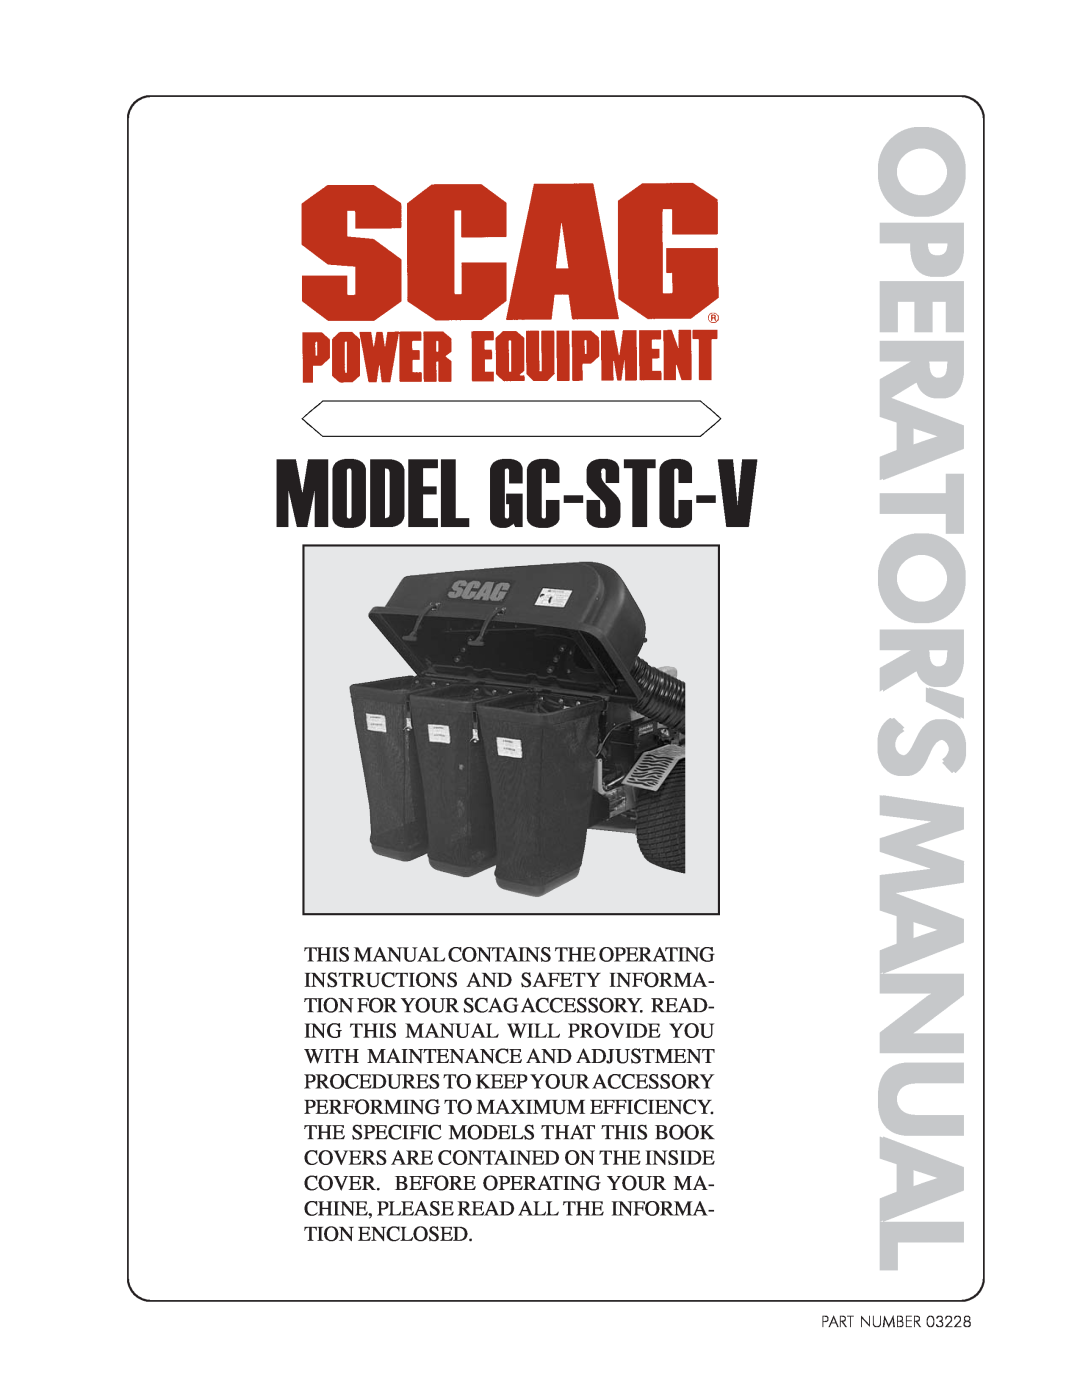 Scag Power Equipment GC-STC-V operating instructions Operator’Smanual, Model Gc-Stc-V 